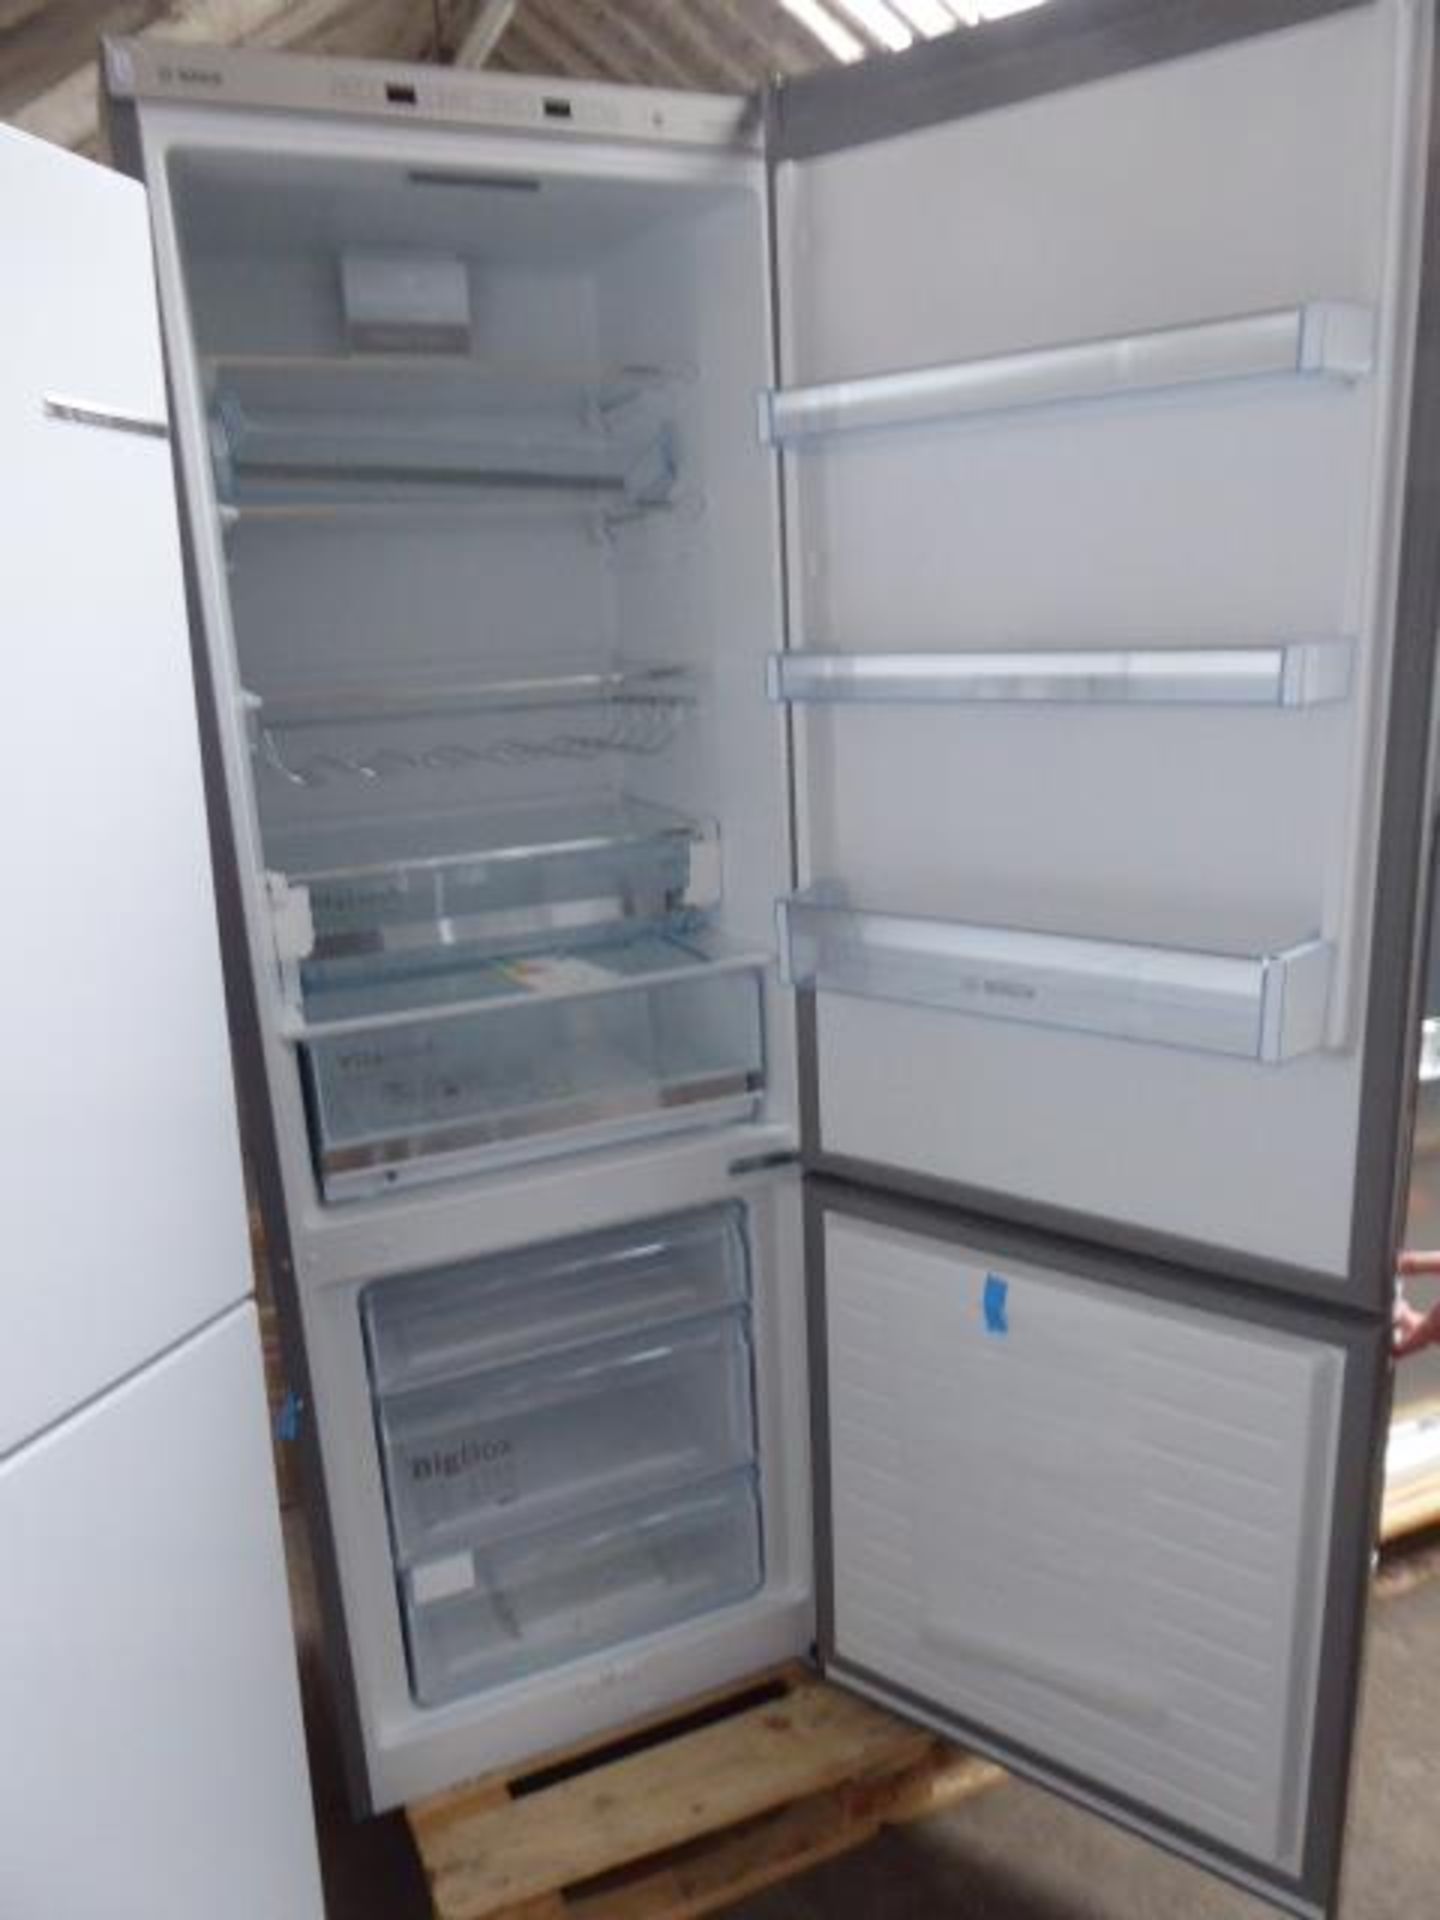 KGE49AICAGB Bosch Free-standing fridge-freezer - Image 2 of 2